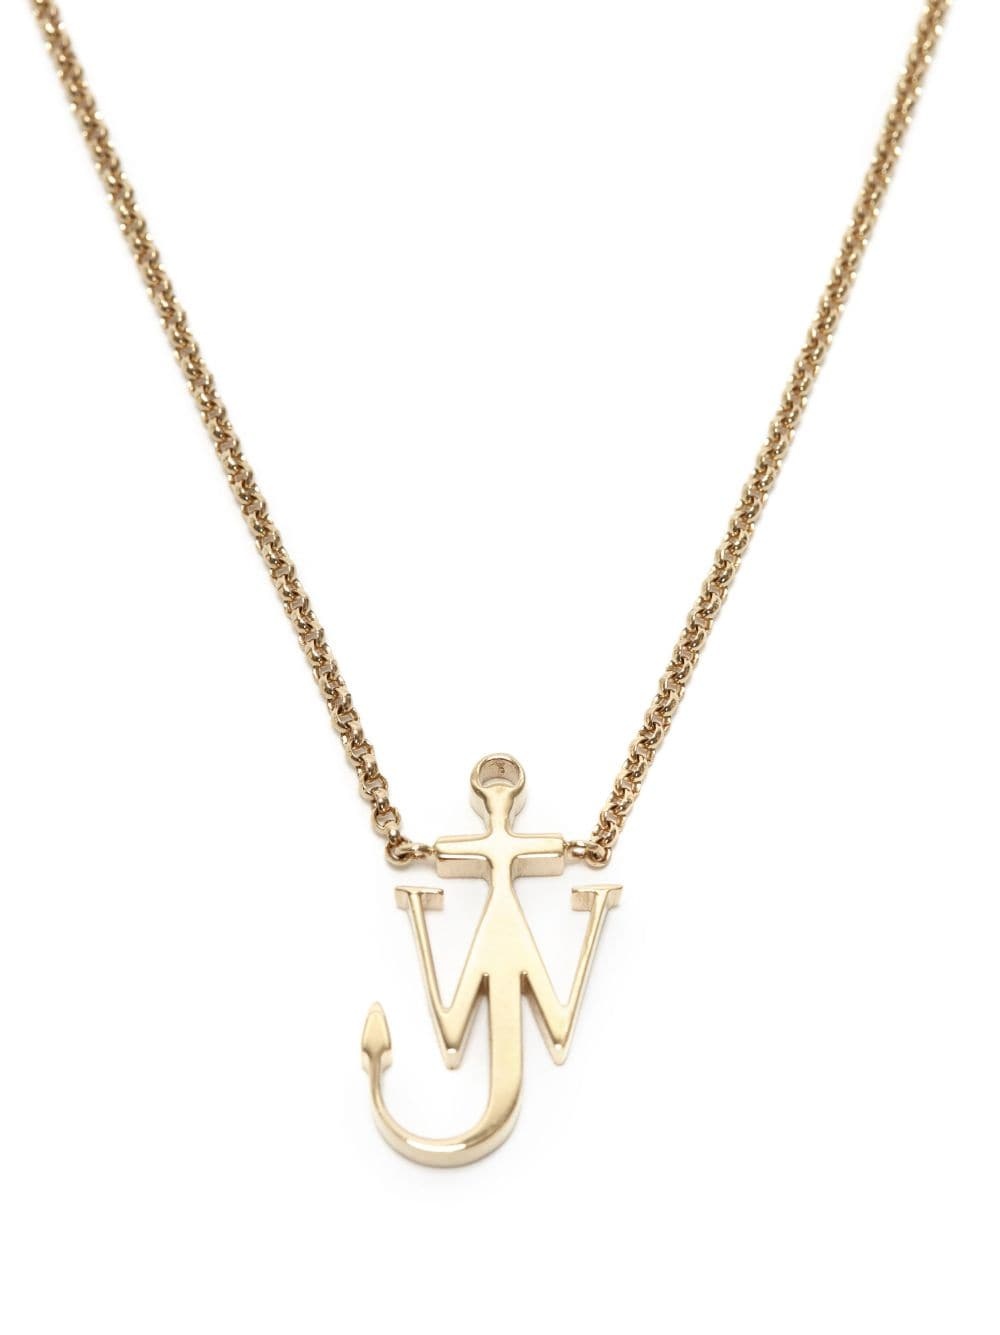 Anchor pendant necklace - 1